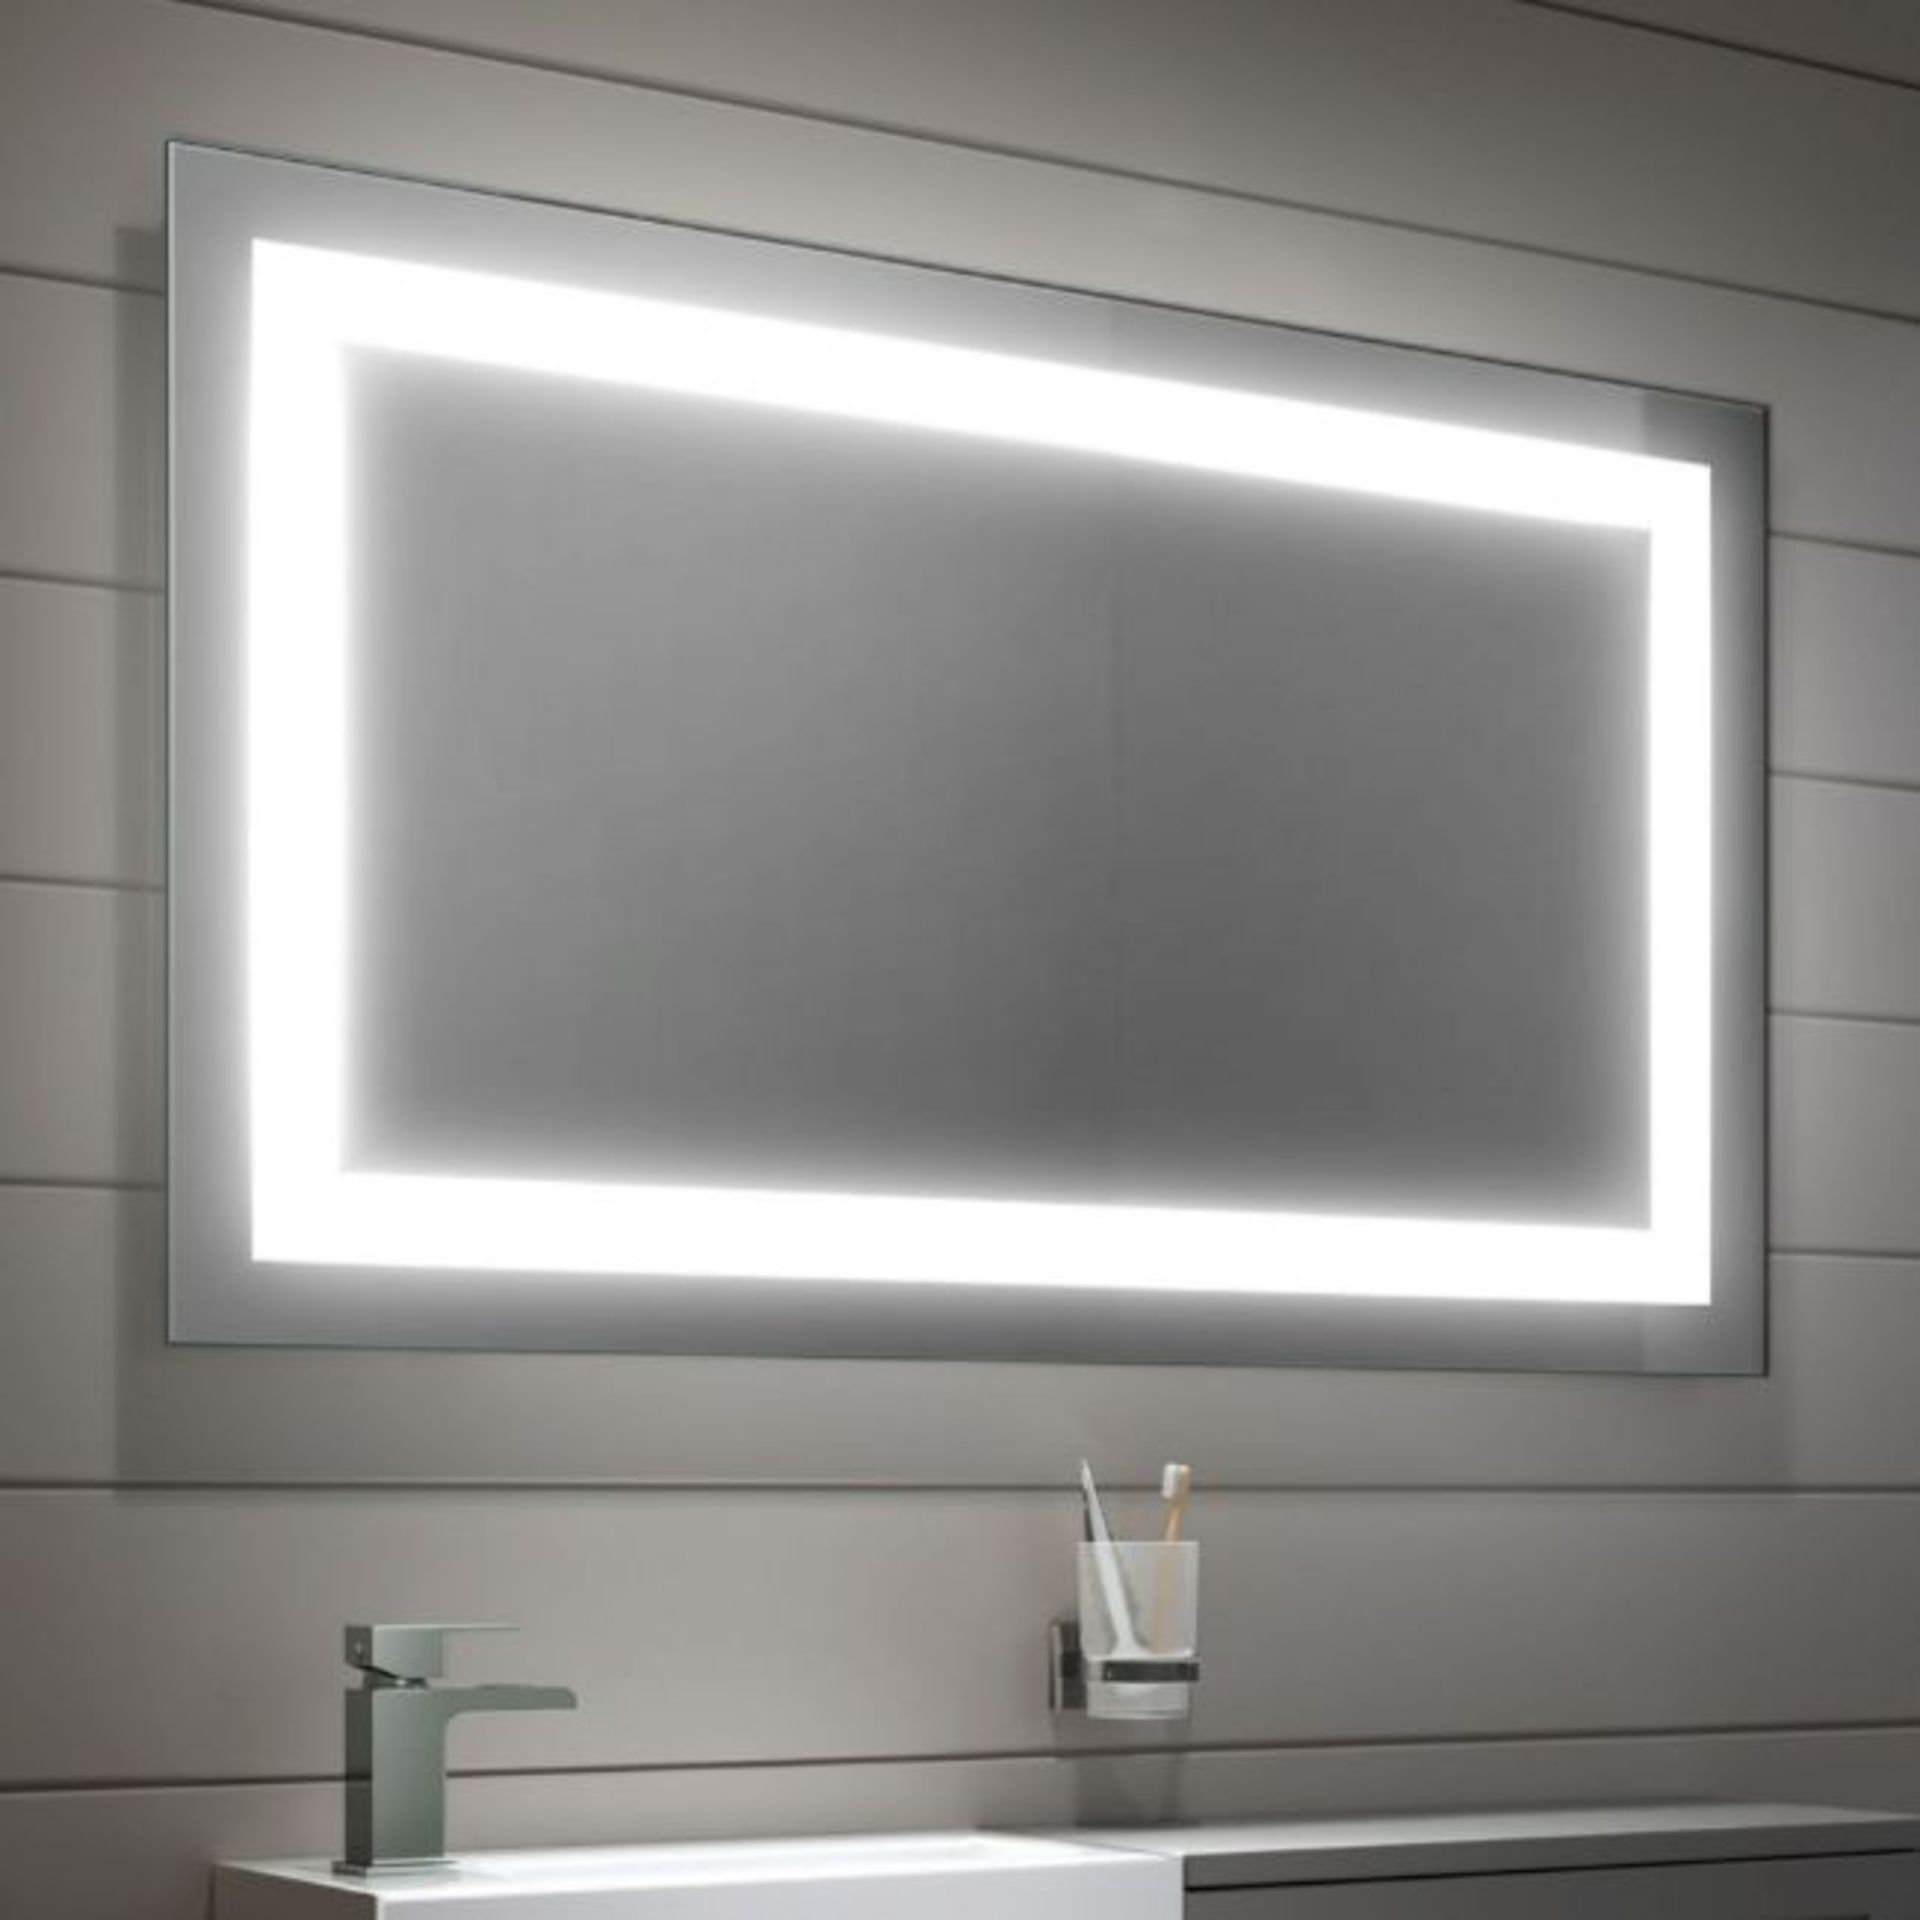 New 600x1000 Nova Illuminated Led Mirror. RRP £499.99.Ml7006.We Love This Mirror As It Provid... - Image 3 of 3